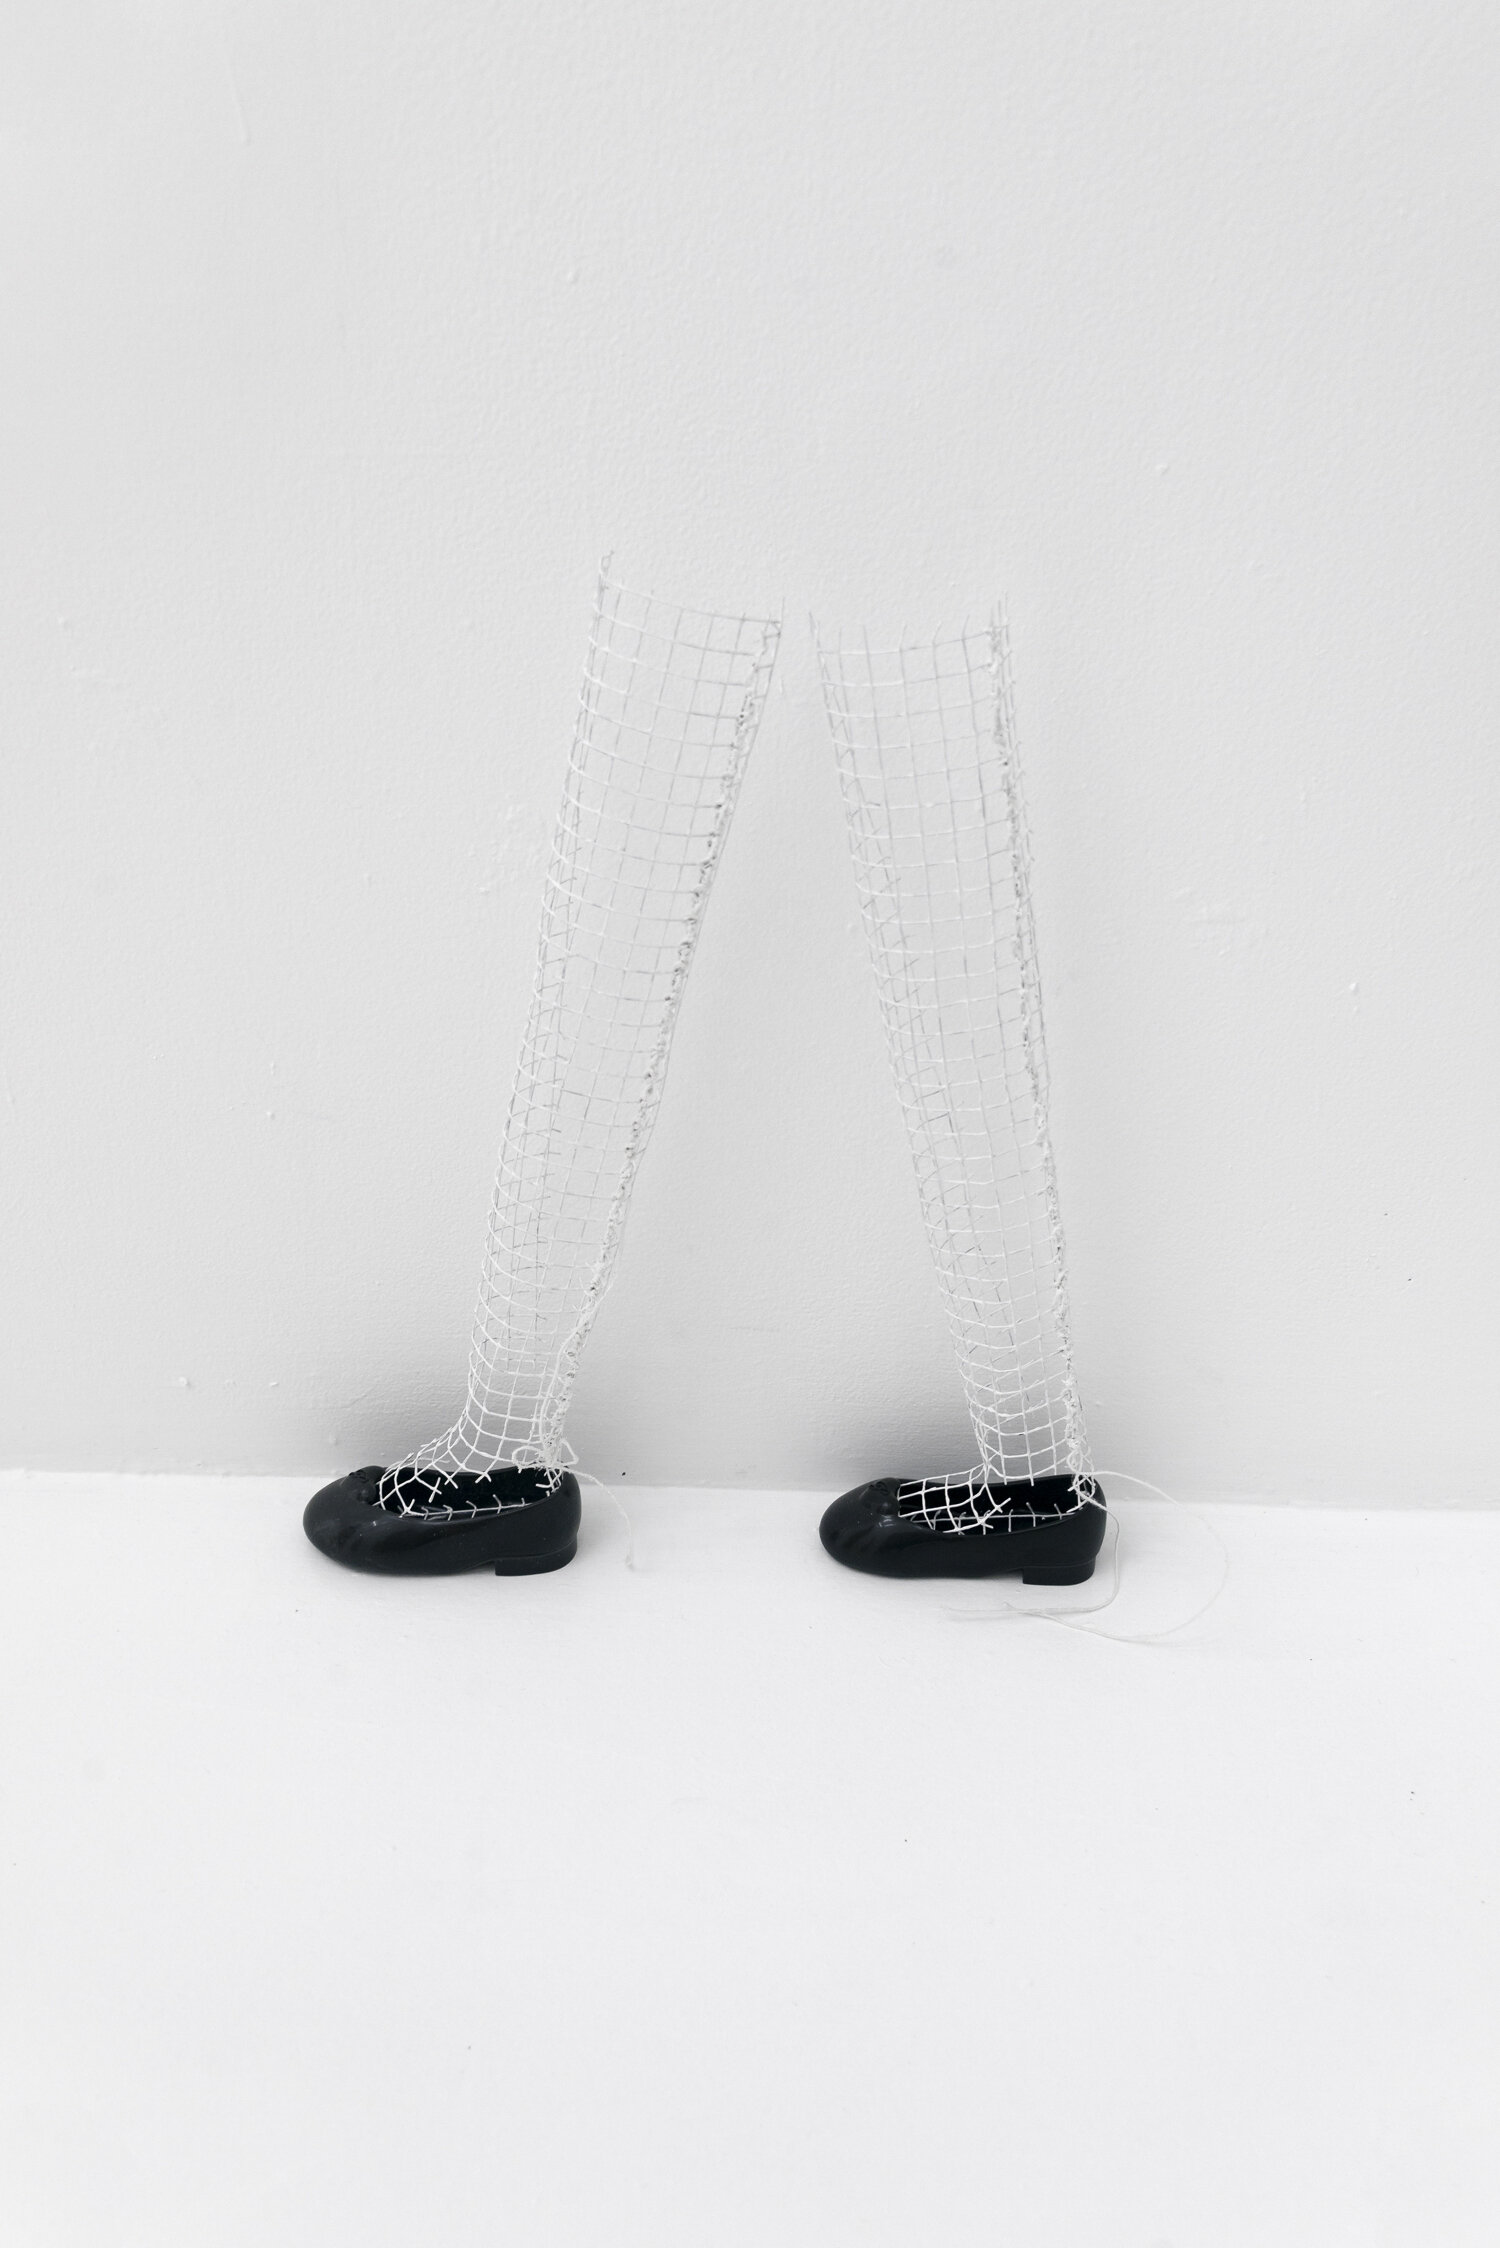   Tall Polio Legs , 2019, Doll shoes, steel, nylon thread, acrylic paint 20 x 16 x 3 in  